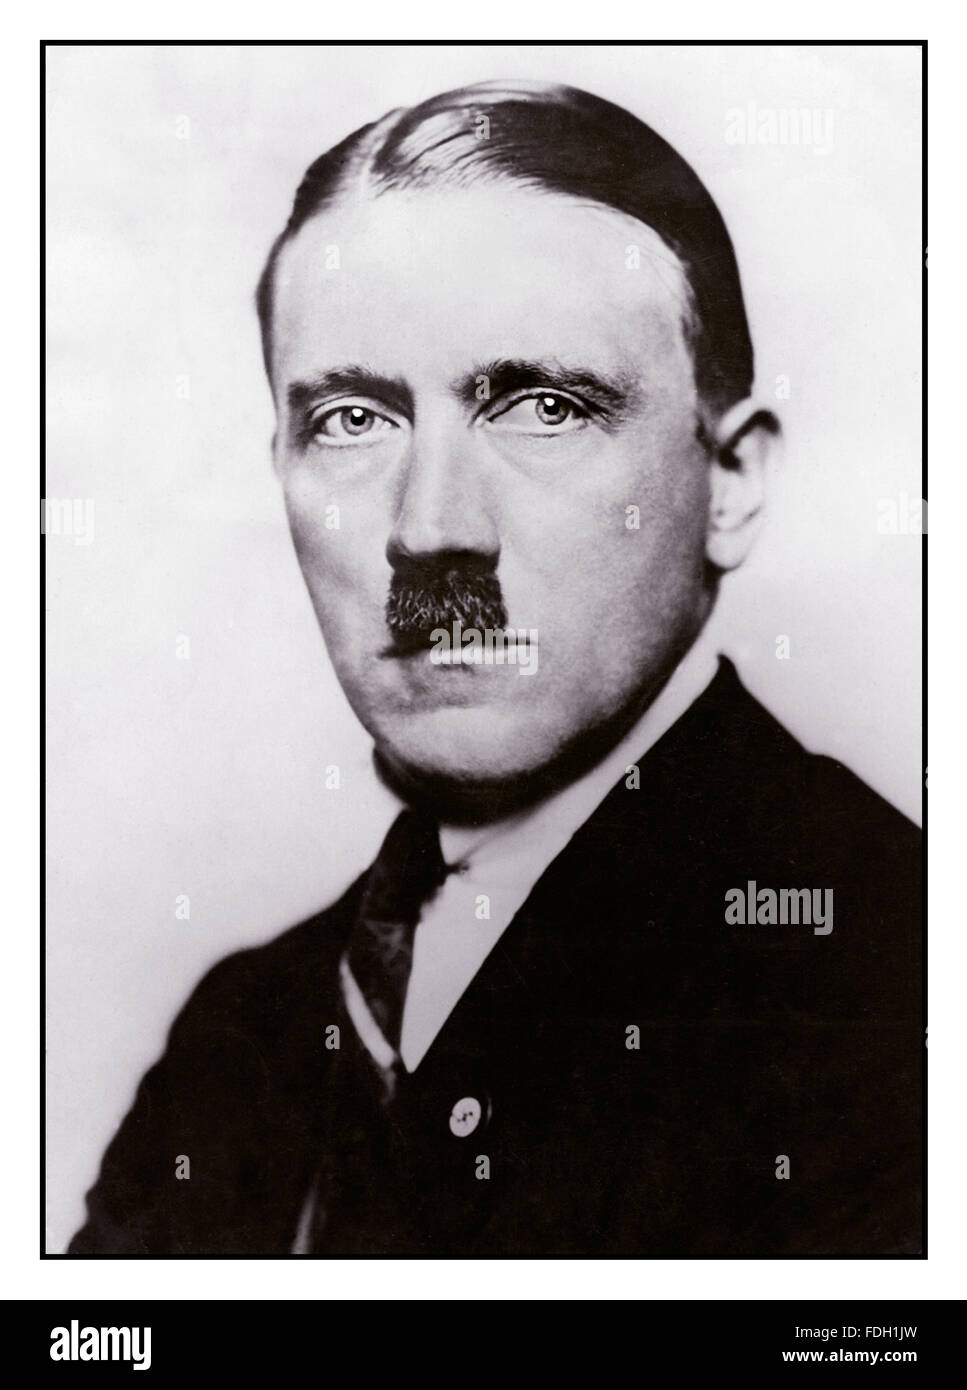 ADOLF HITLER FORMAL STUDIO PORTRAIT 1920's B&W studio posed portrait photograph of young Adolf Hitler Stock Photo